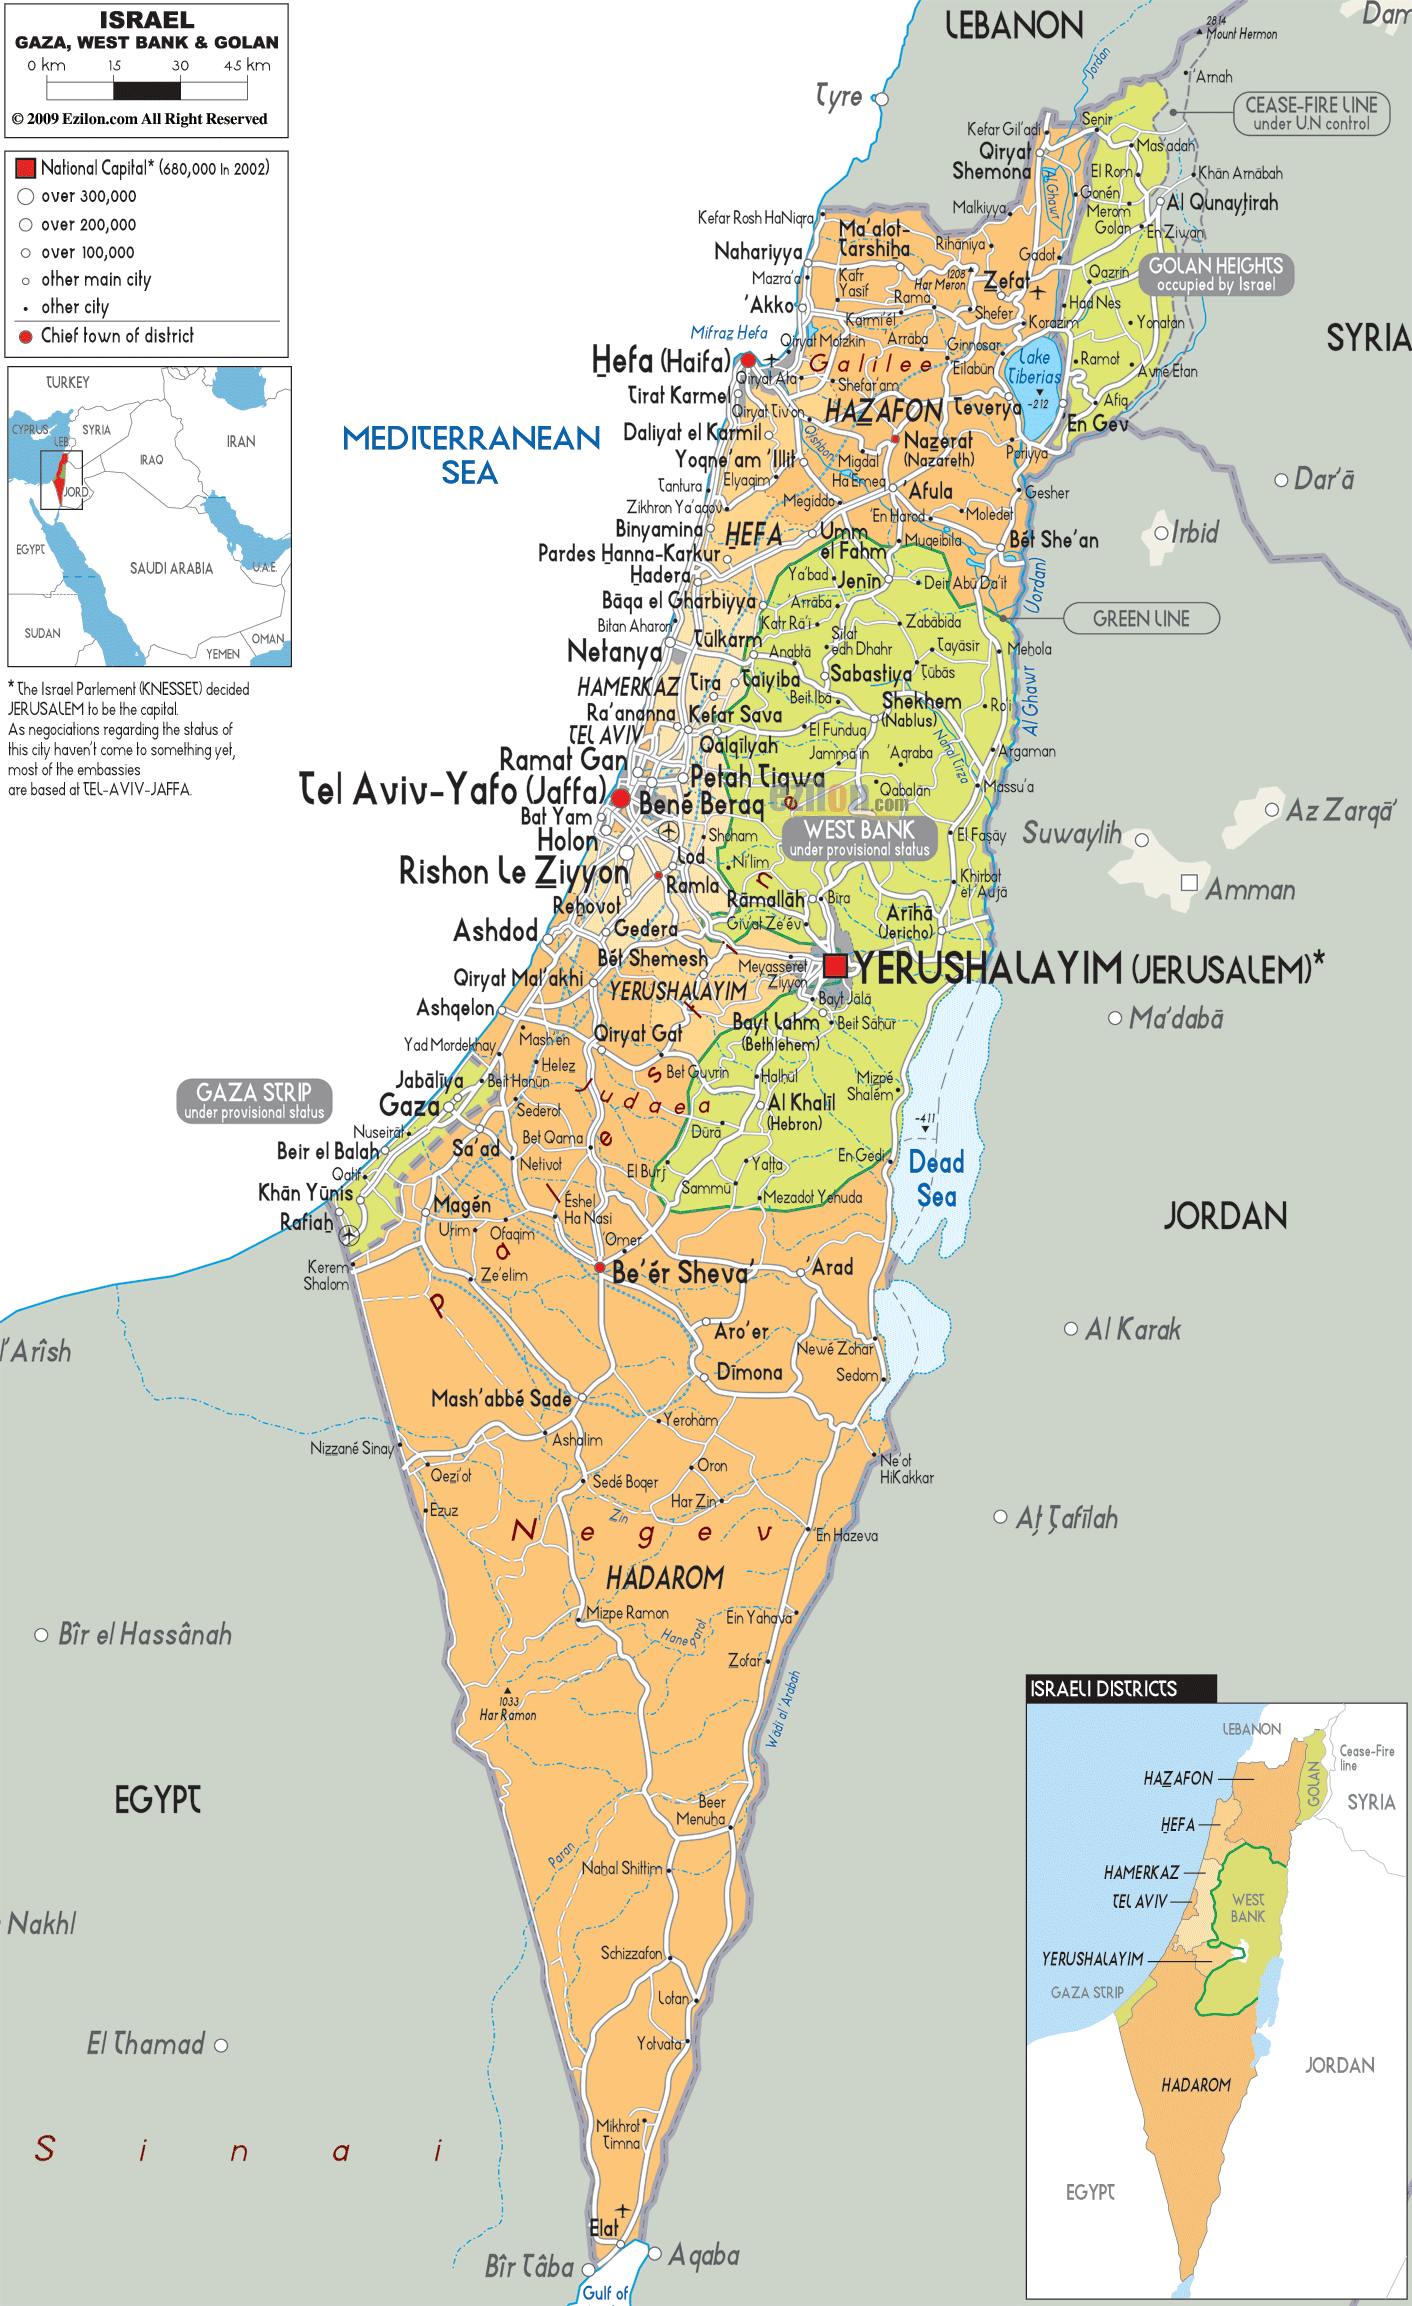 http://www.ezilon.com/maps/images/asia/political-map-of-Israel.gif